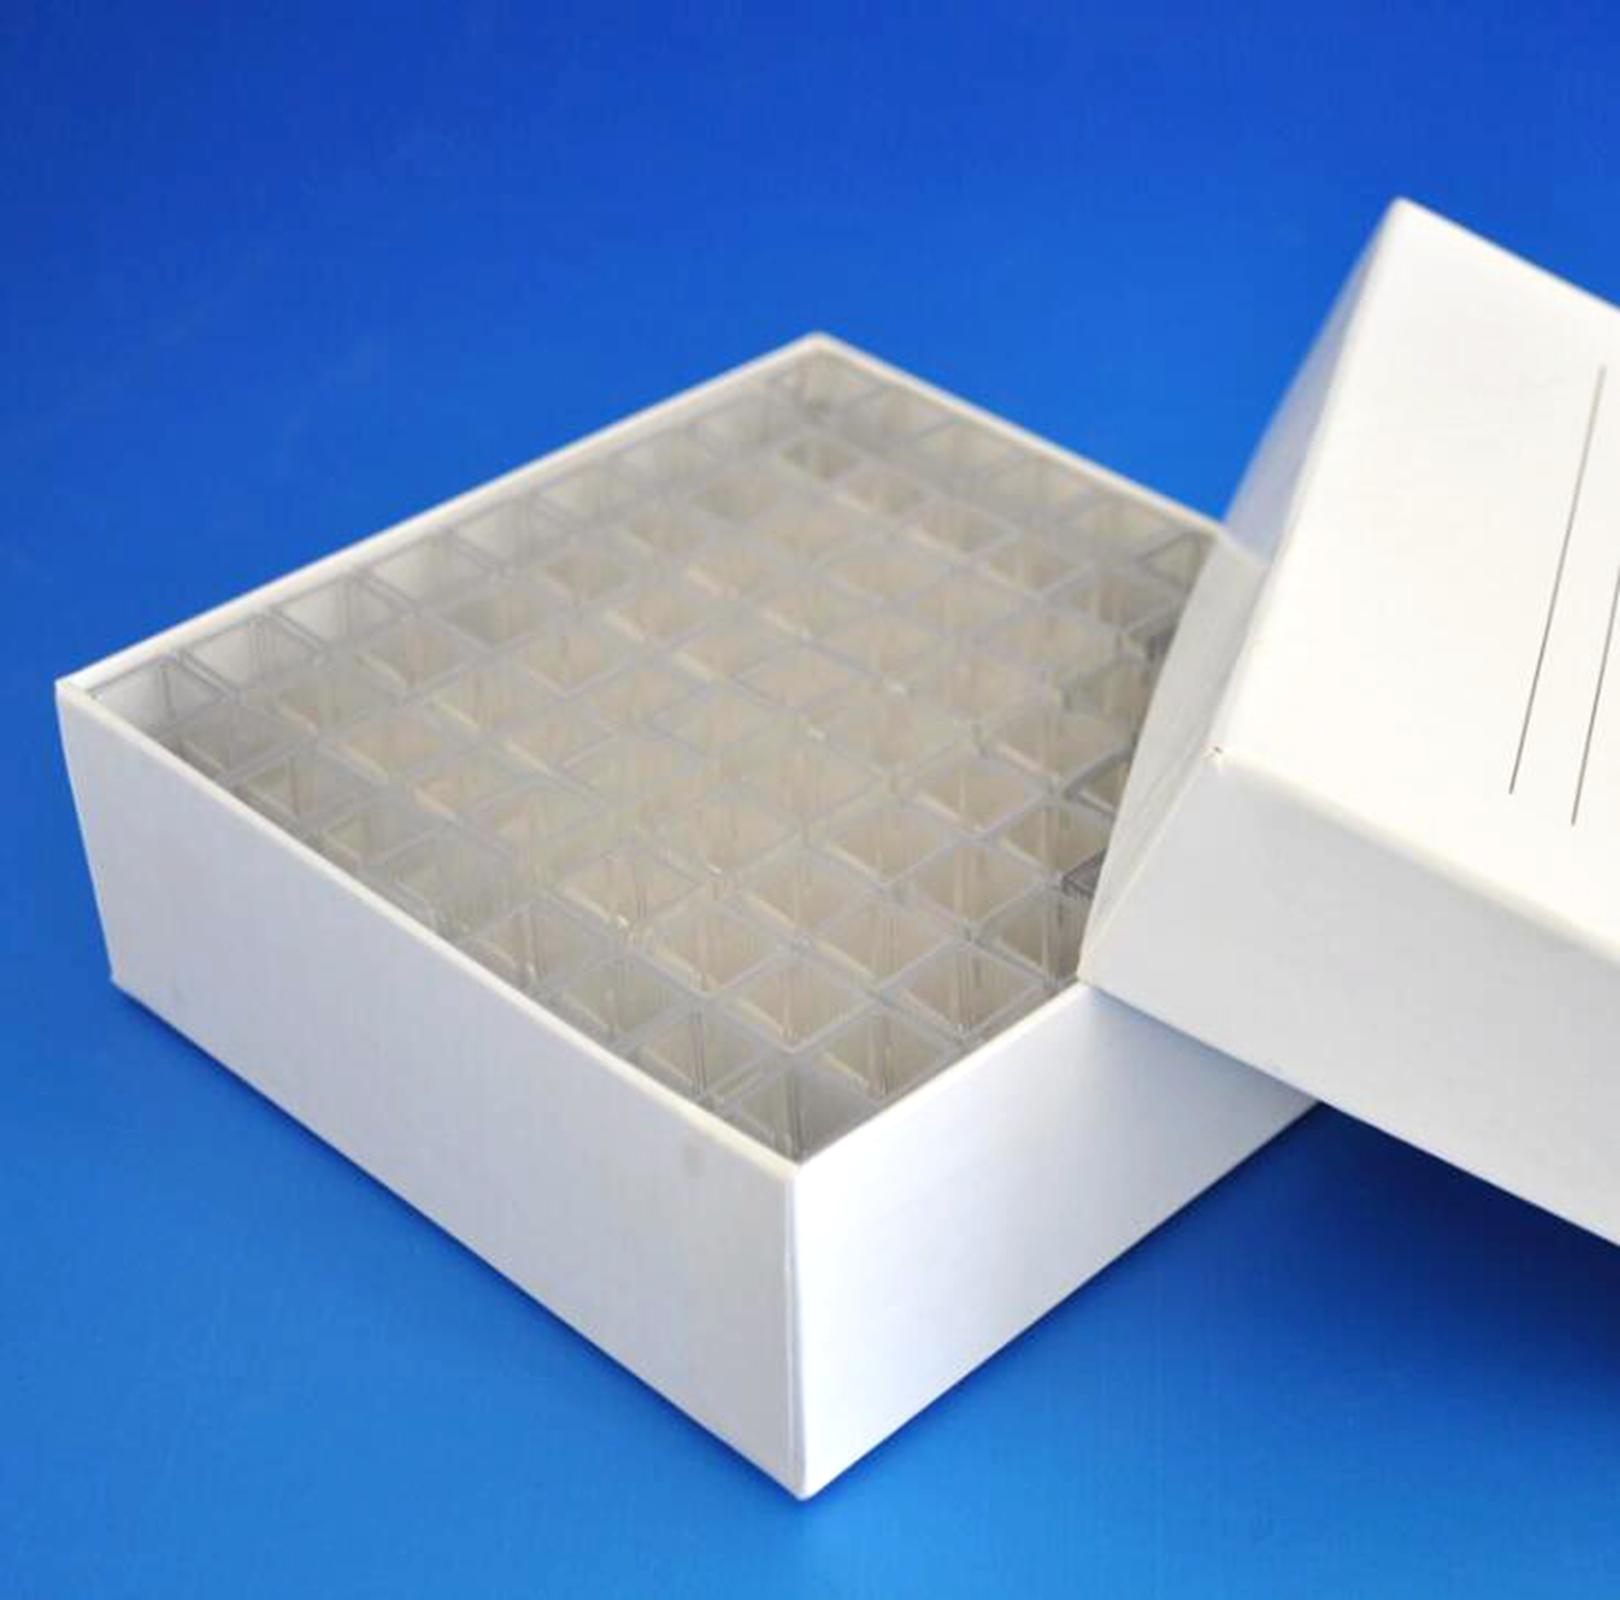 Box 81pcs 4.5ml Square Plastic Test Tubes vials container craft cuvette Lab Kit Tools